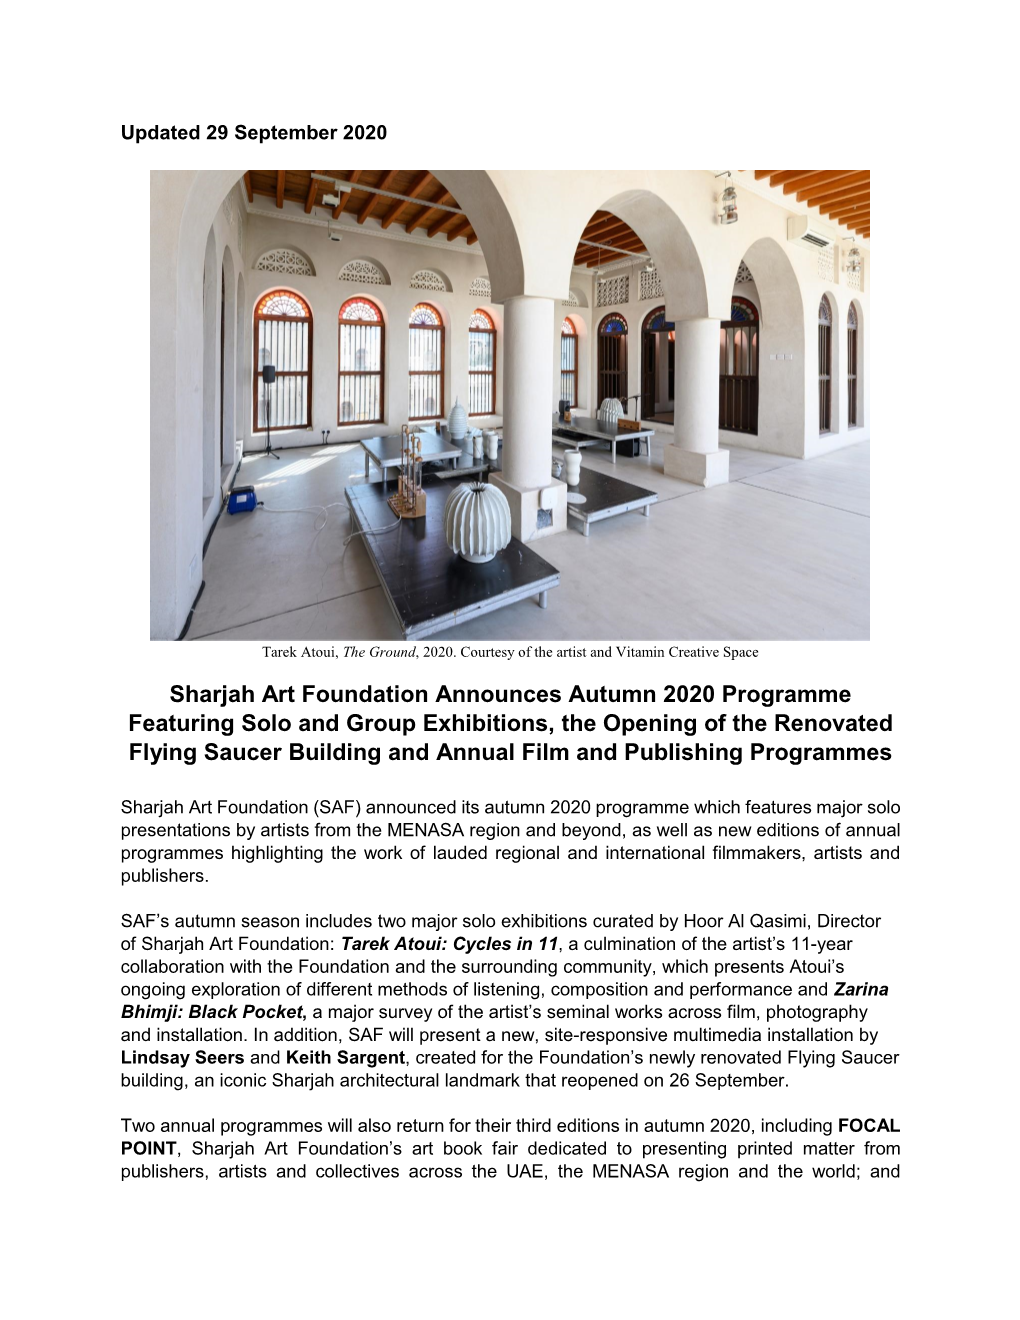 Sharjah Art Foundation Announces Autumn 2020 Programme Featuring